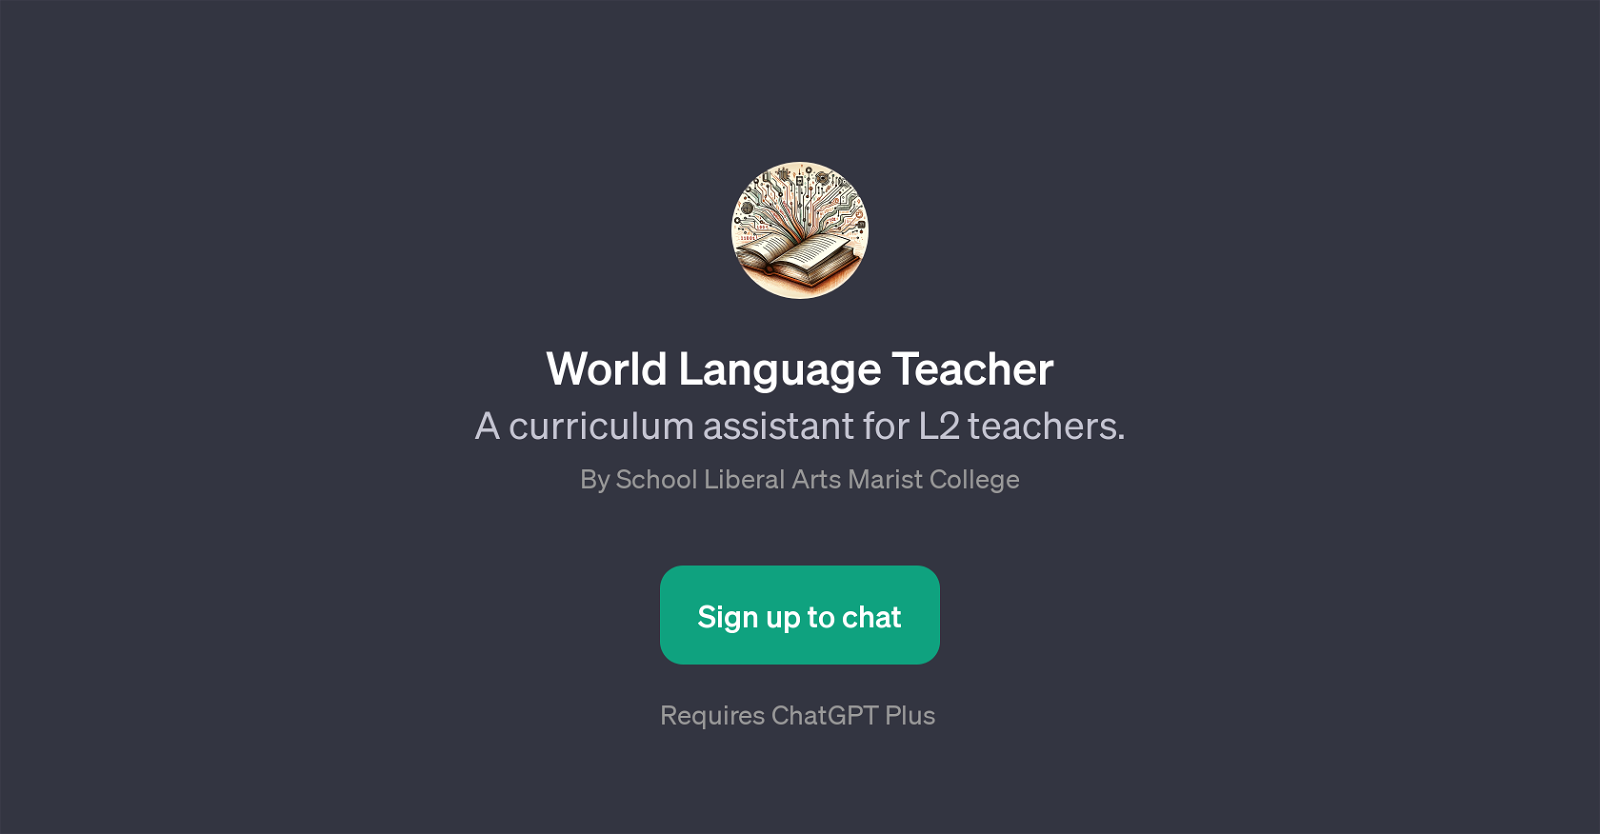 World Language Teacher website